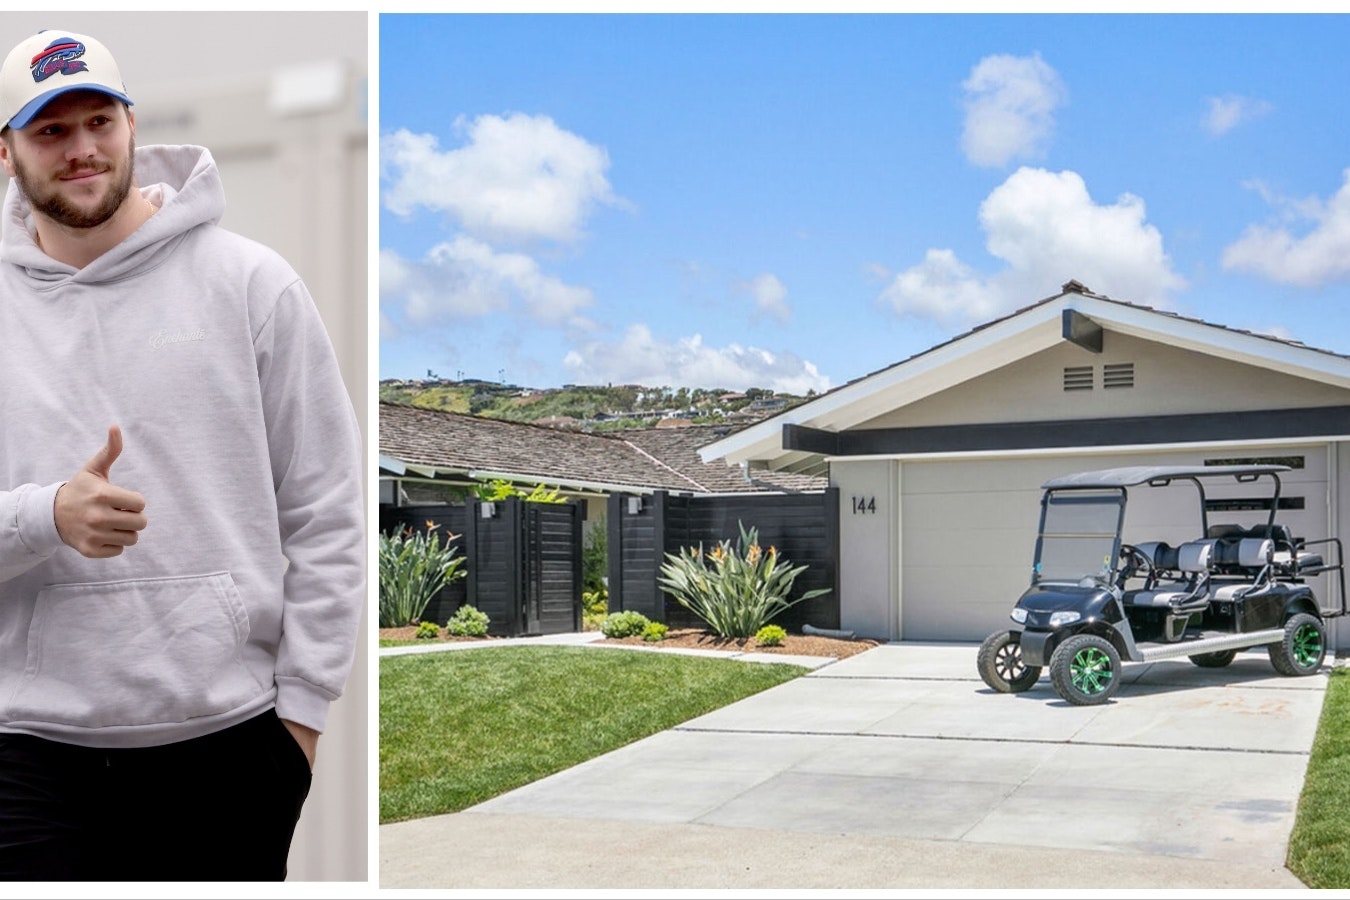 Former UW star and Buffalo Bills quarterback Josh Allen has bought a Southern California home for $7.2 million.